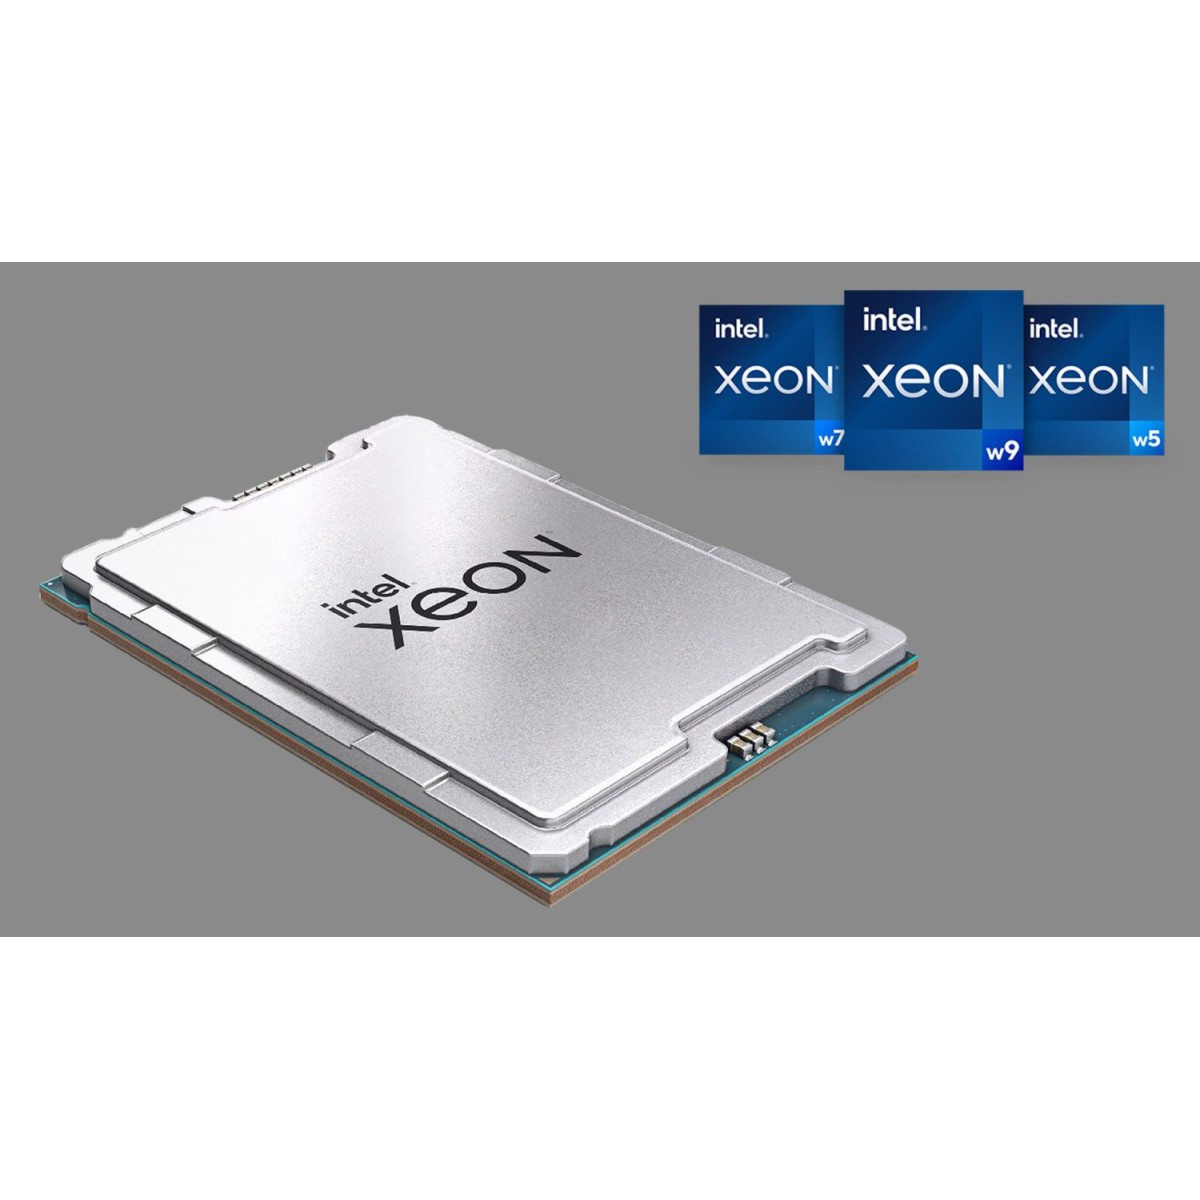 INTEL  Xeon W Processor                        
                                                        Intel